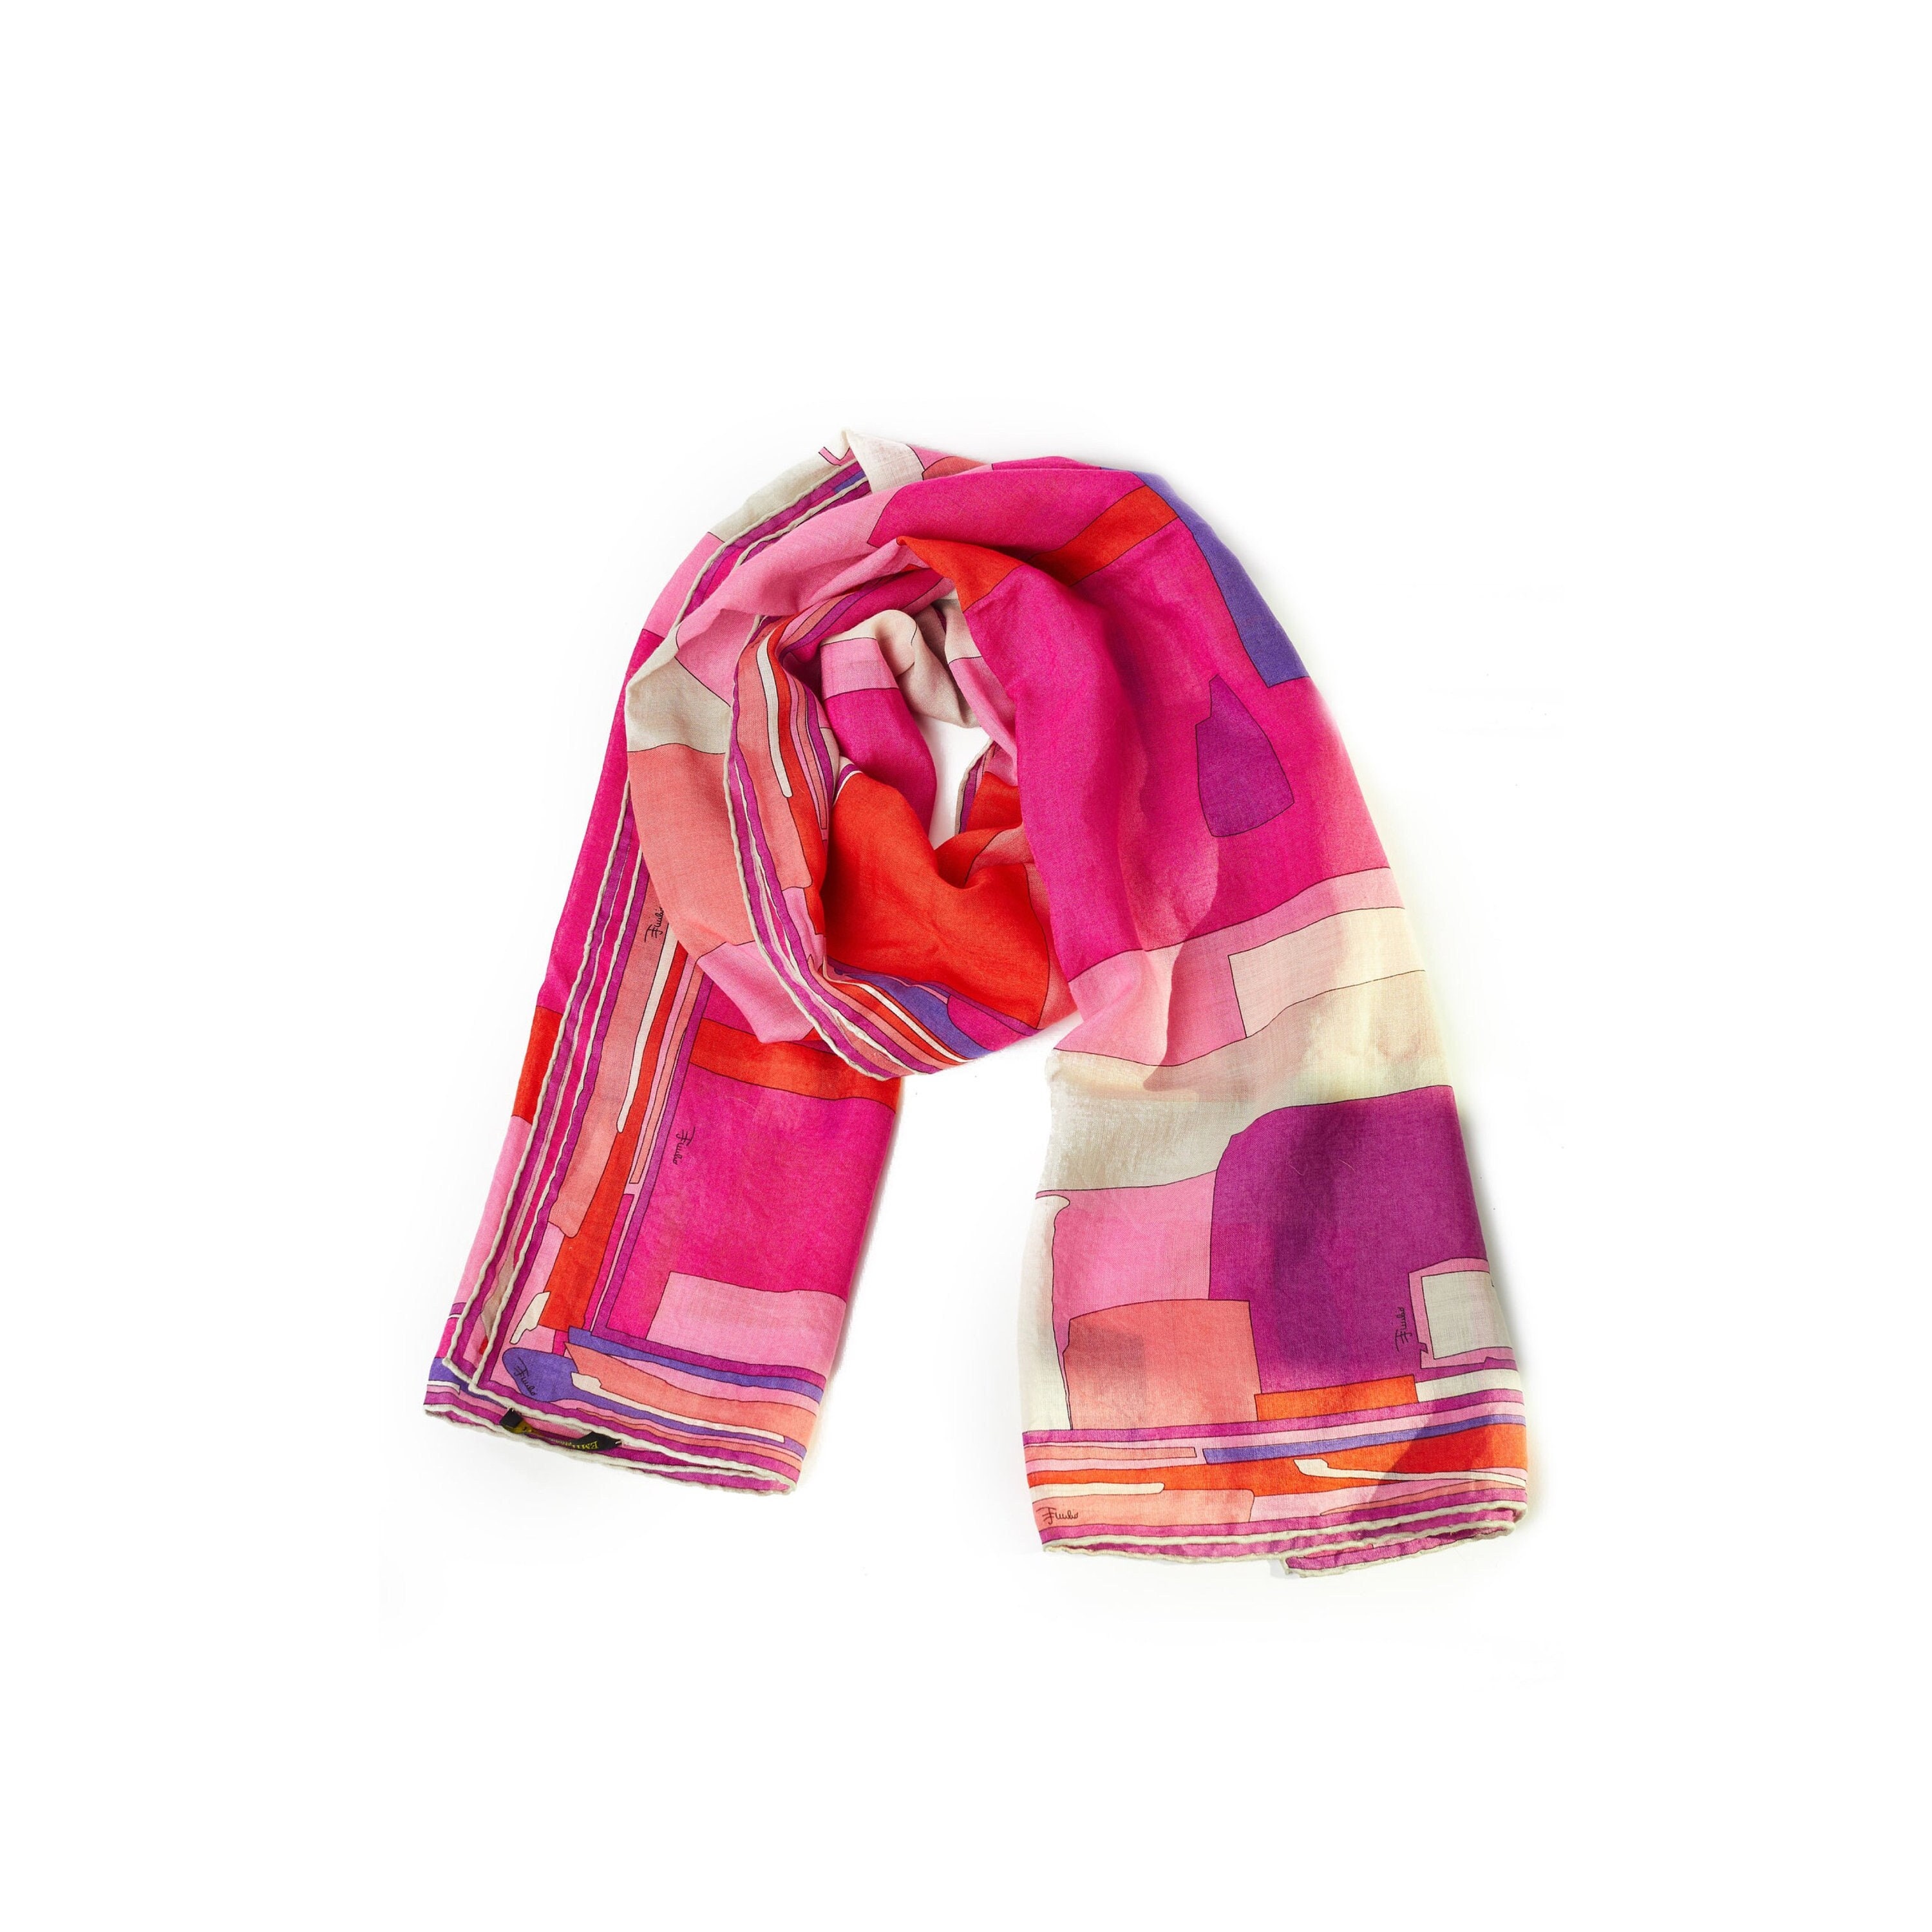 Emilio Pucci scarf silk 65cm 25″ Scarf Pucci pattern Purple Yellow